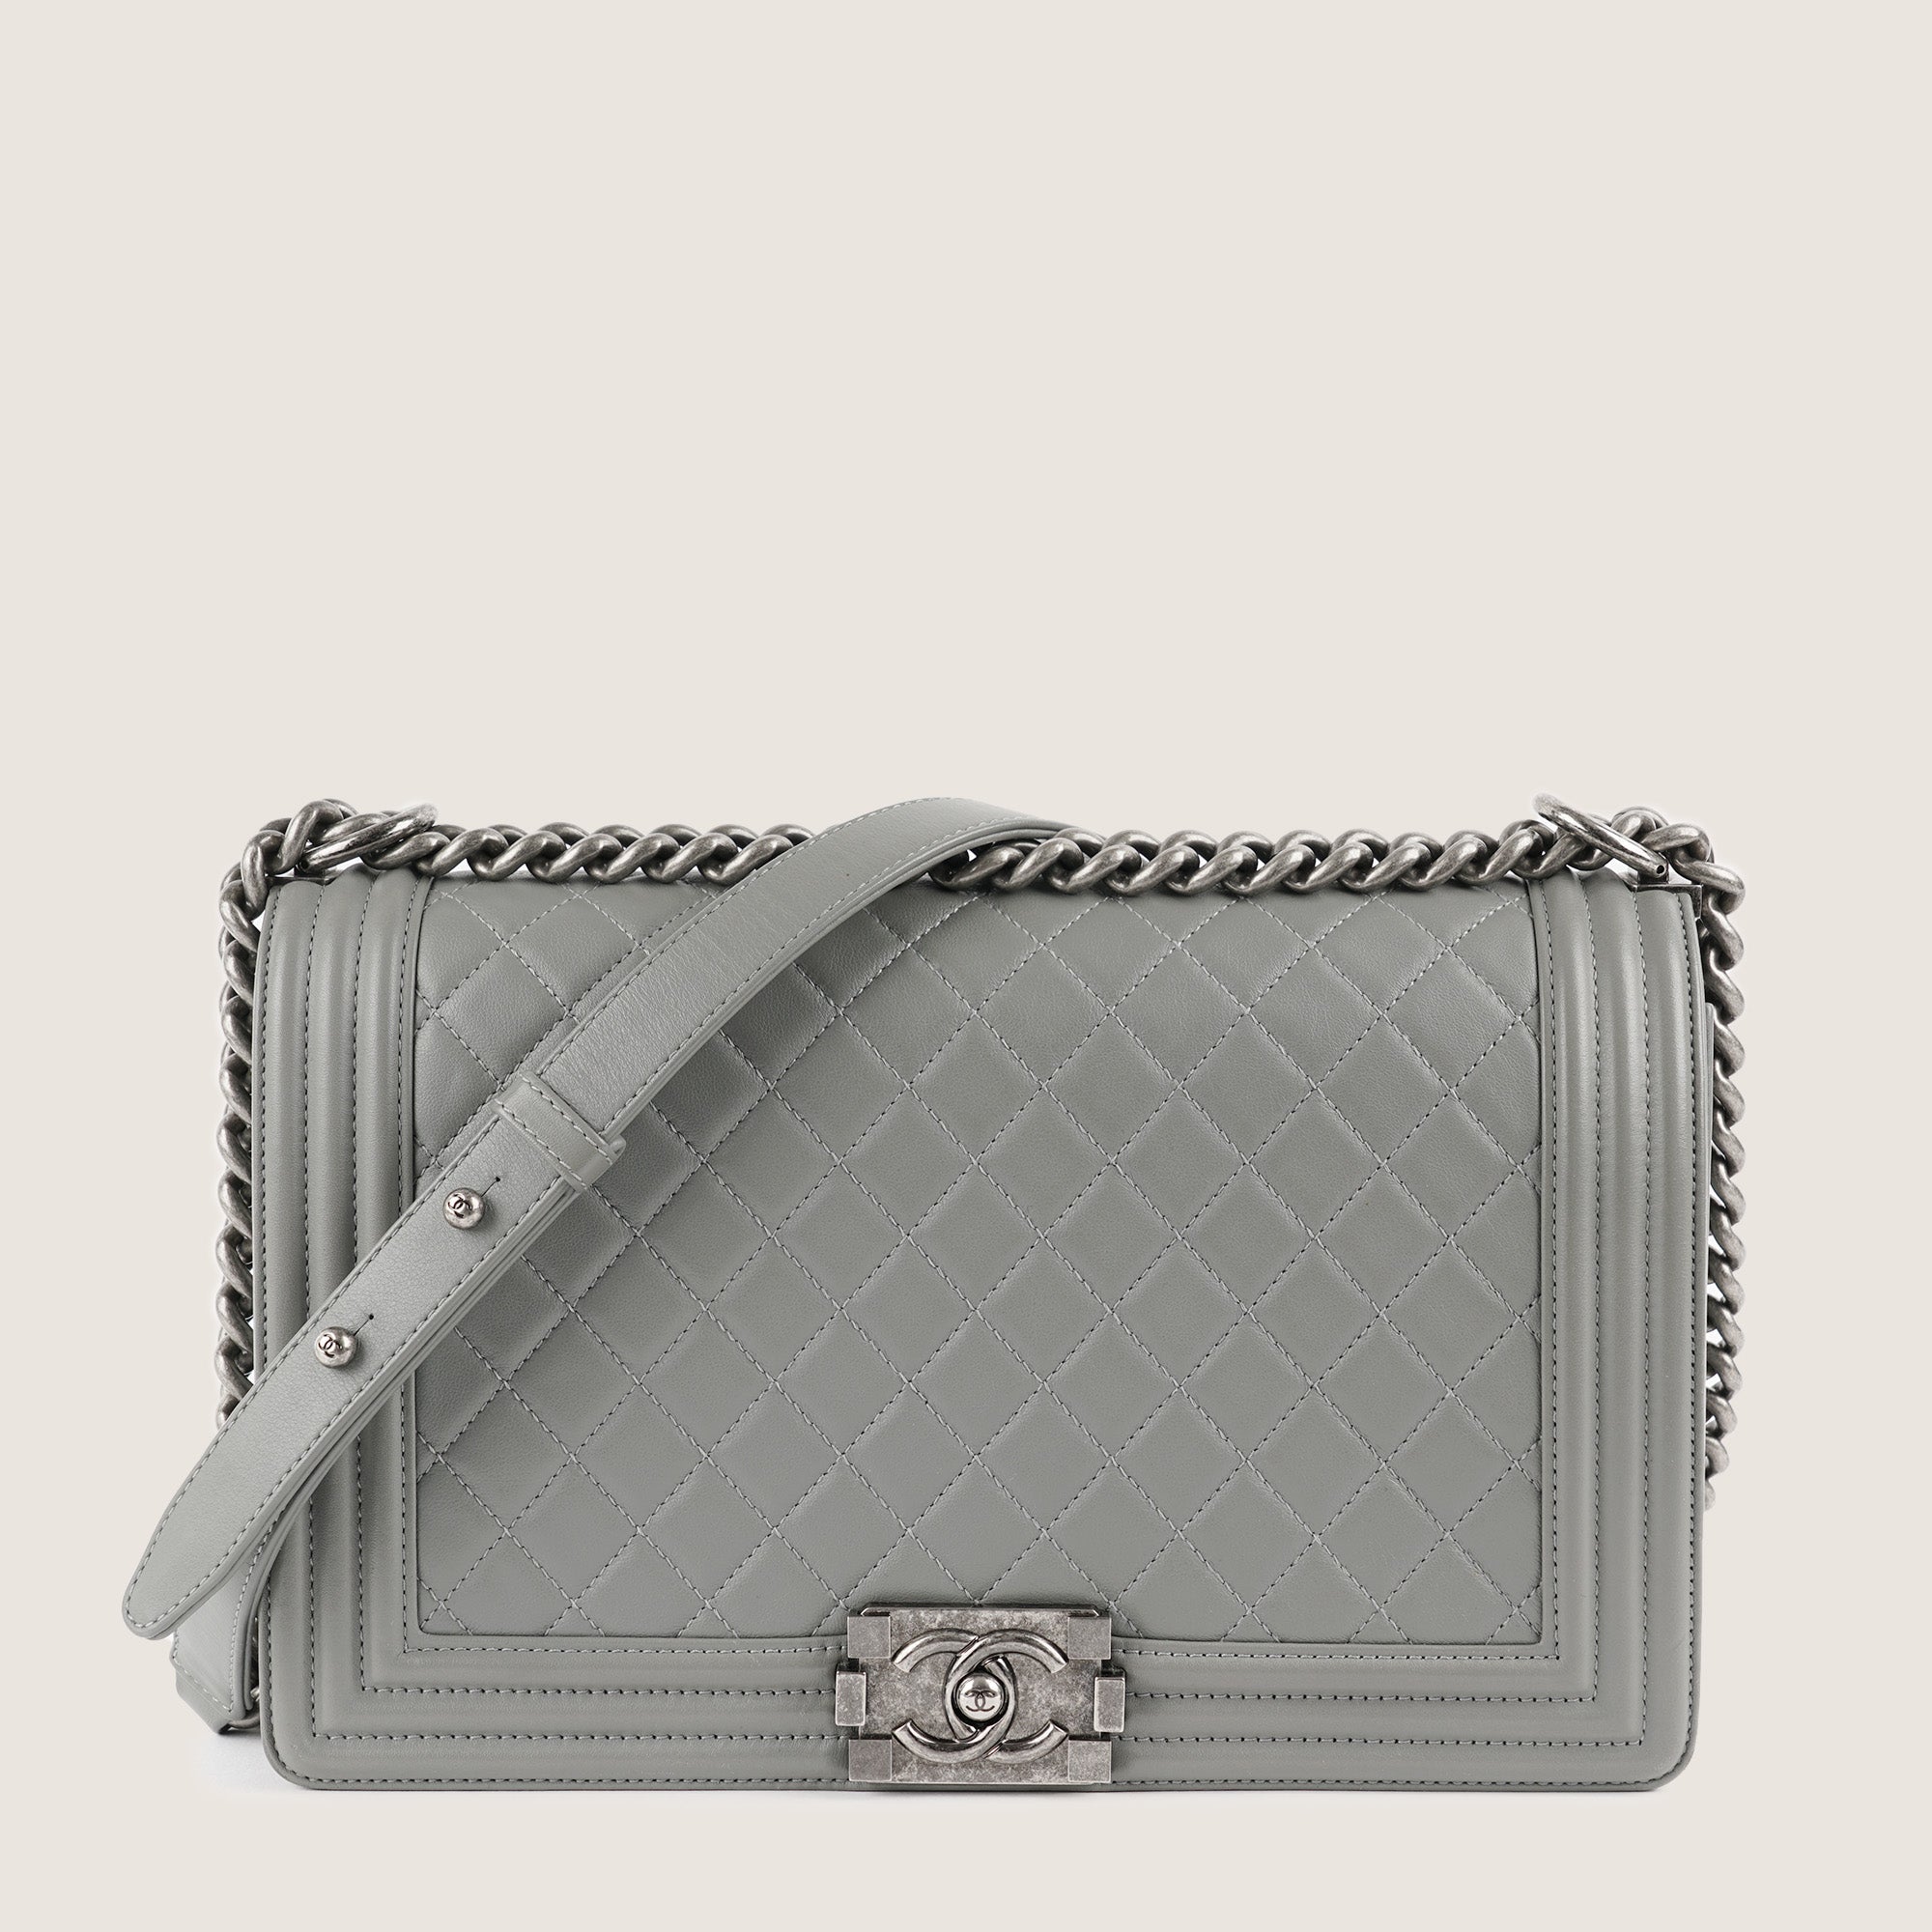 Boy Bag New Medium - CHANEL - Affordable Luxury image